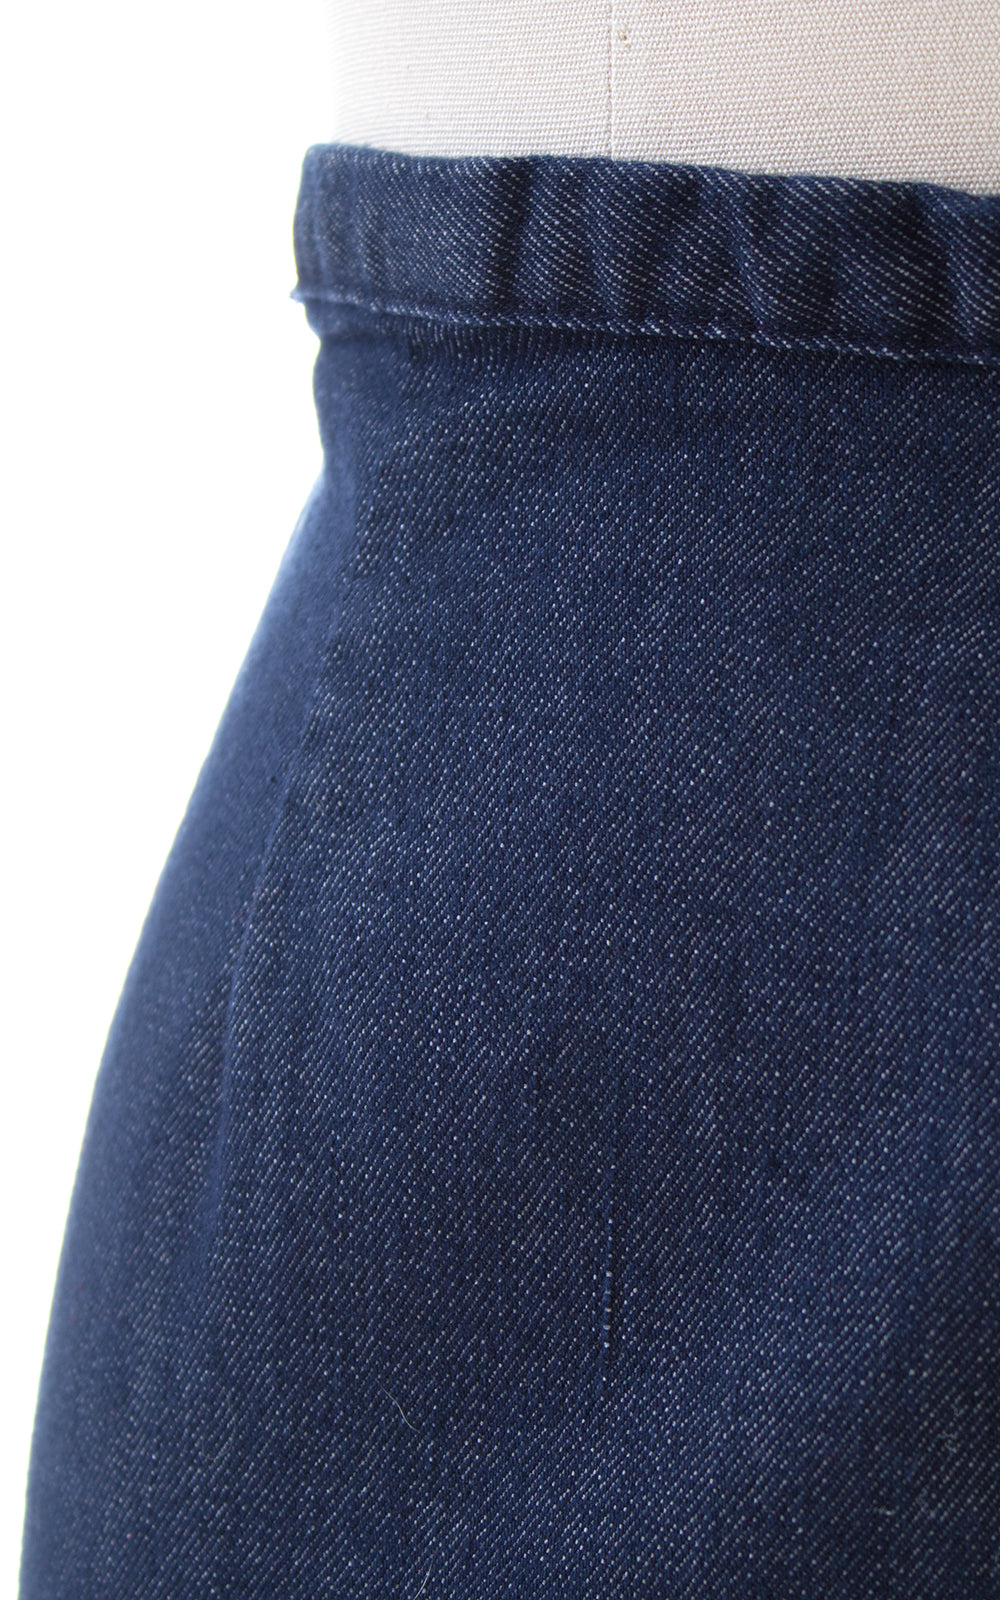 1950s Stretchy Denim High Waisted Pants